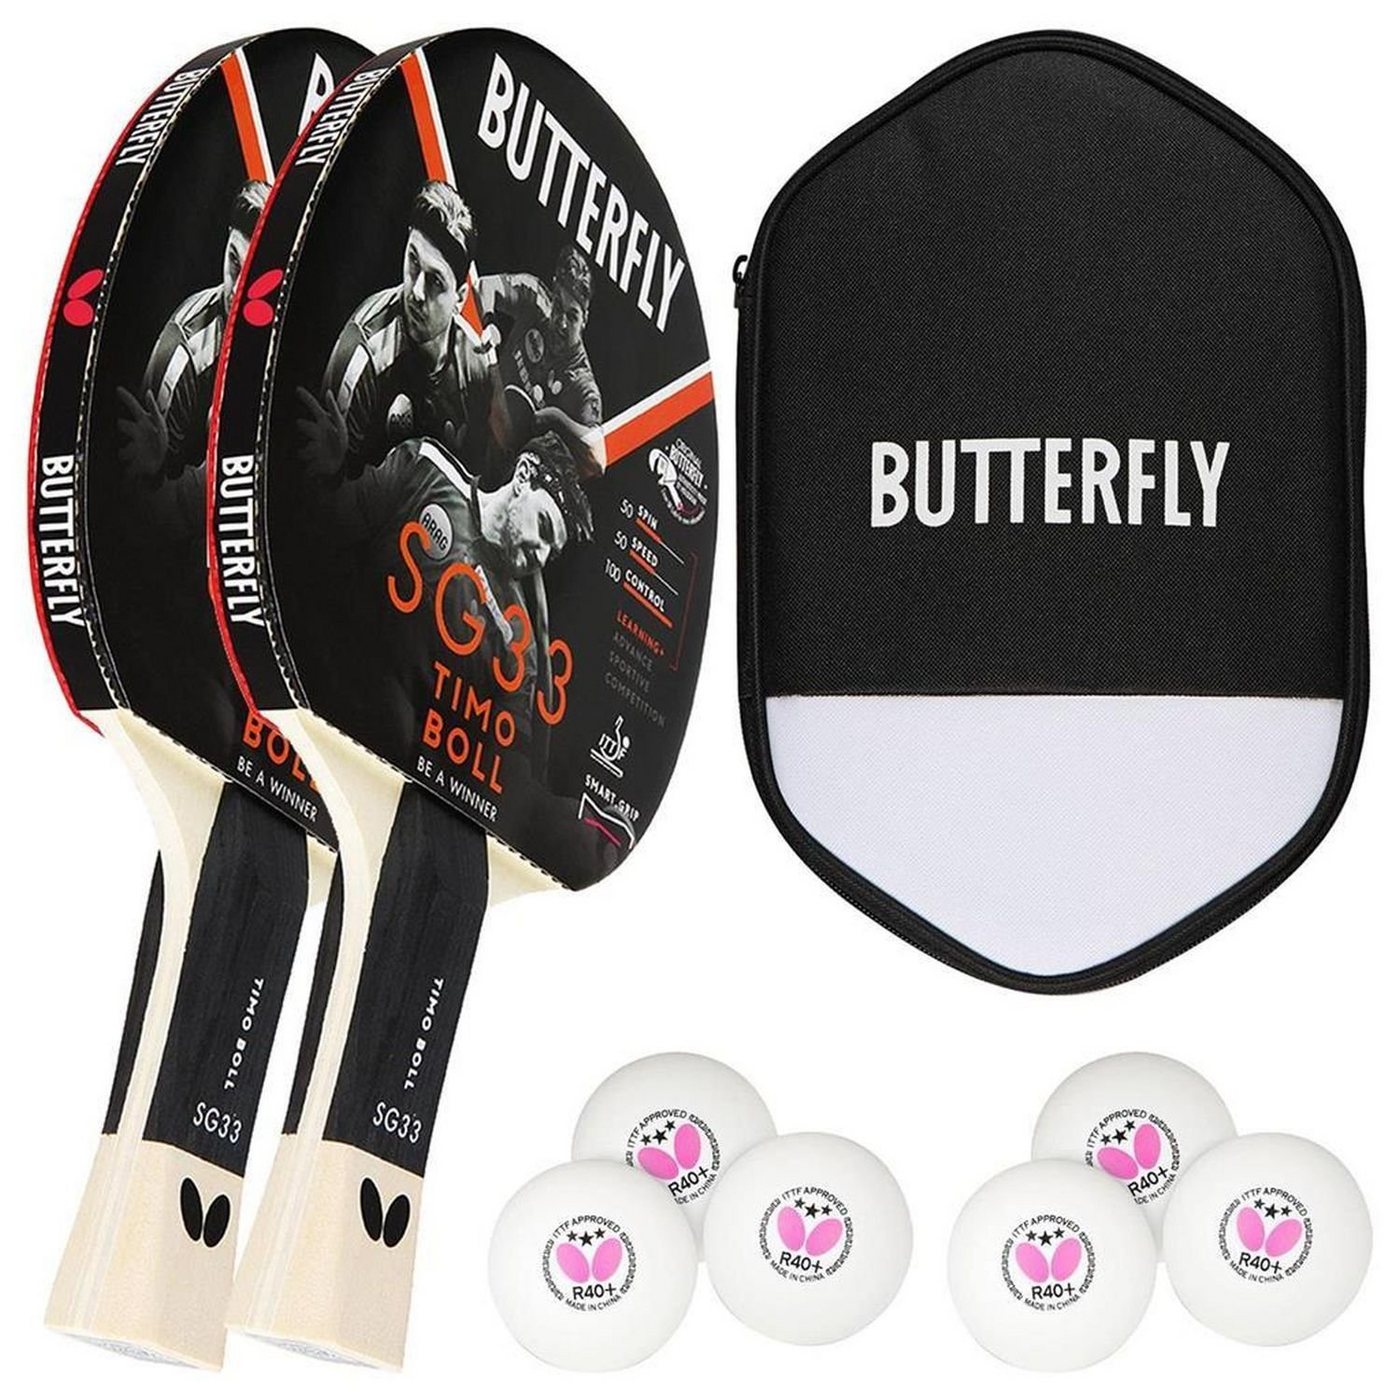 Butterfly Tischtennisschläger 2x Timo Boll SG33 + Cell Case 2 + Bälle, Tischtennis Schläger Set Tischtennisset Table Tennis Bat Racket von Butterfly